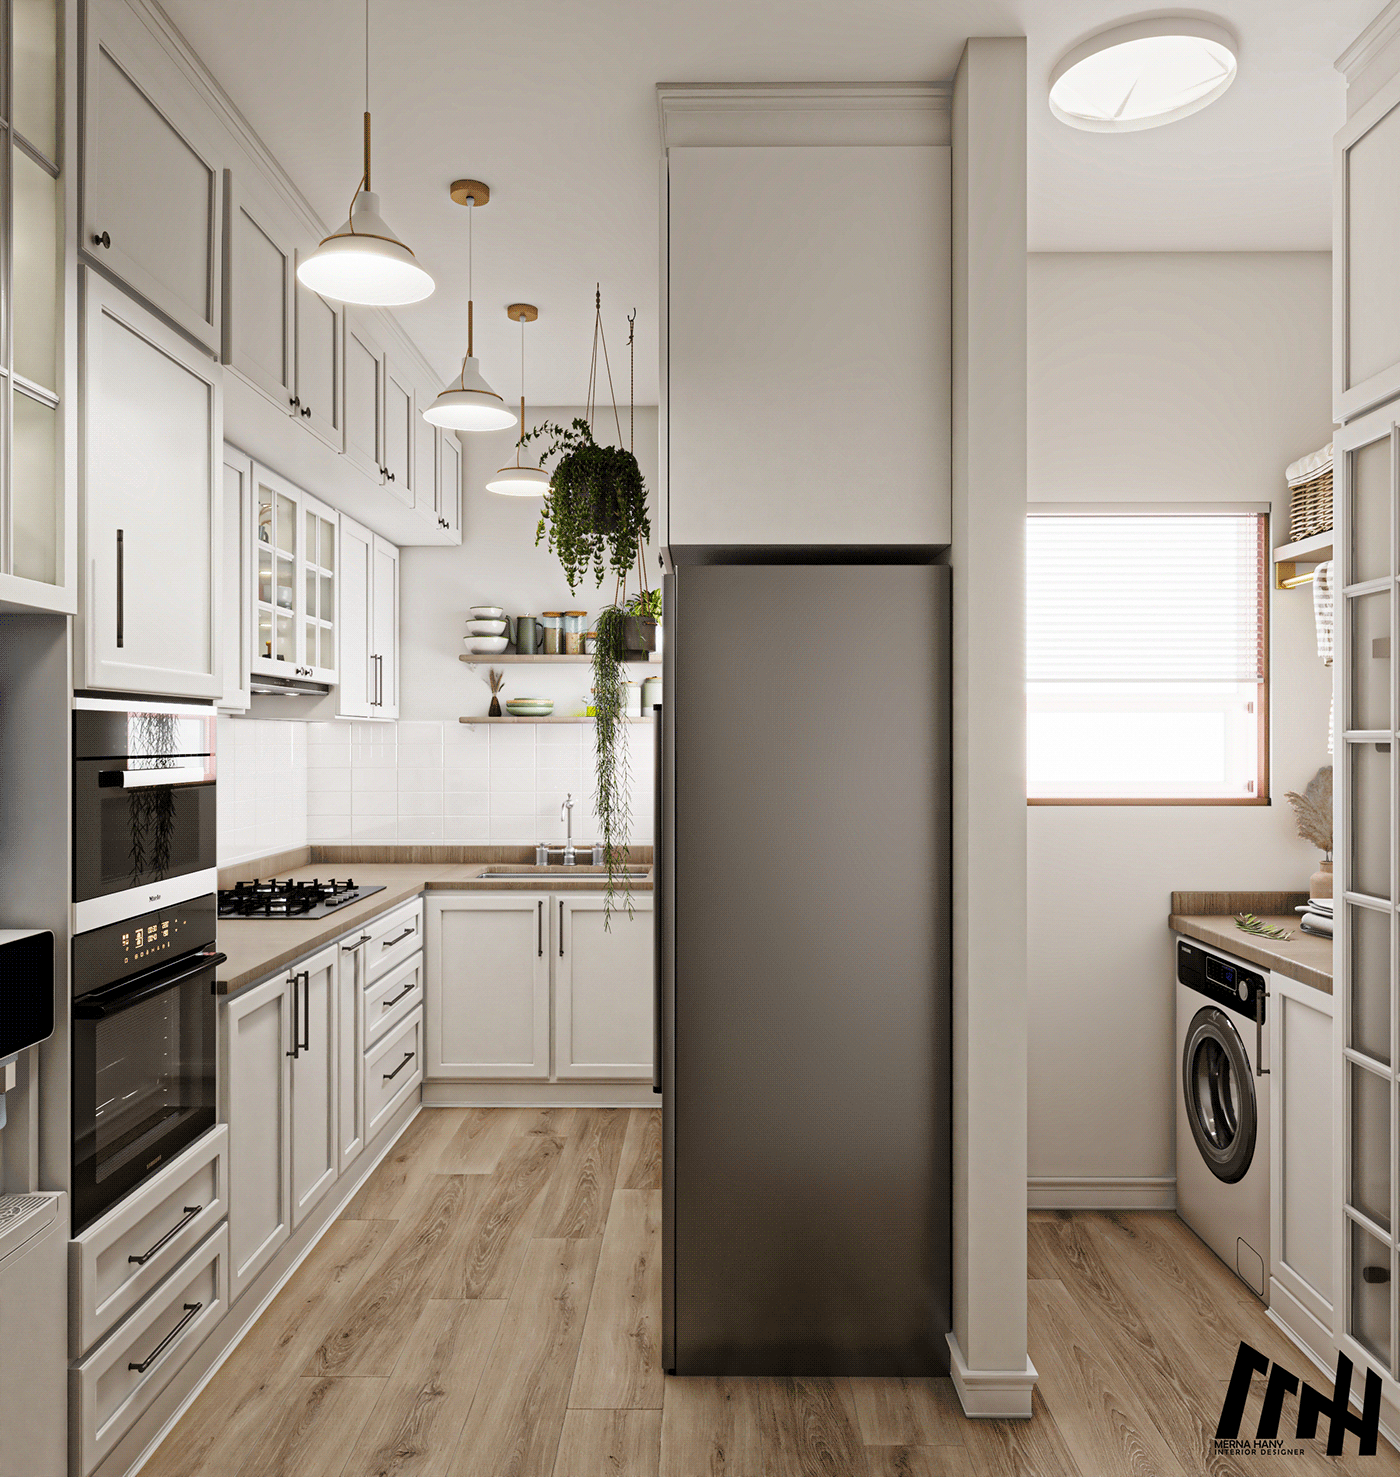 Sink kitchen microwave oven laundry design wood modern vray white kichen